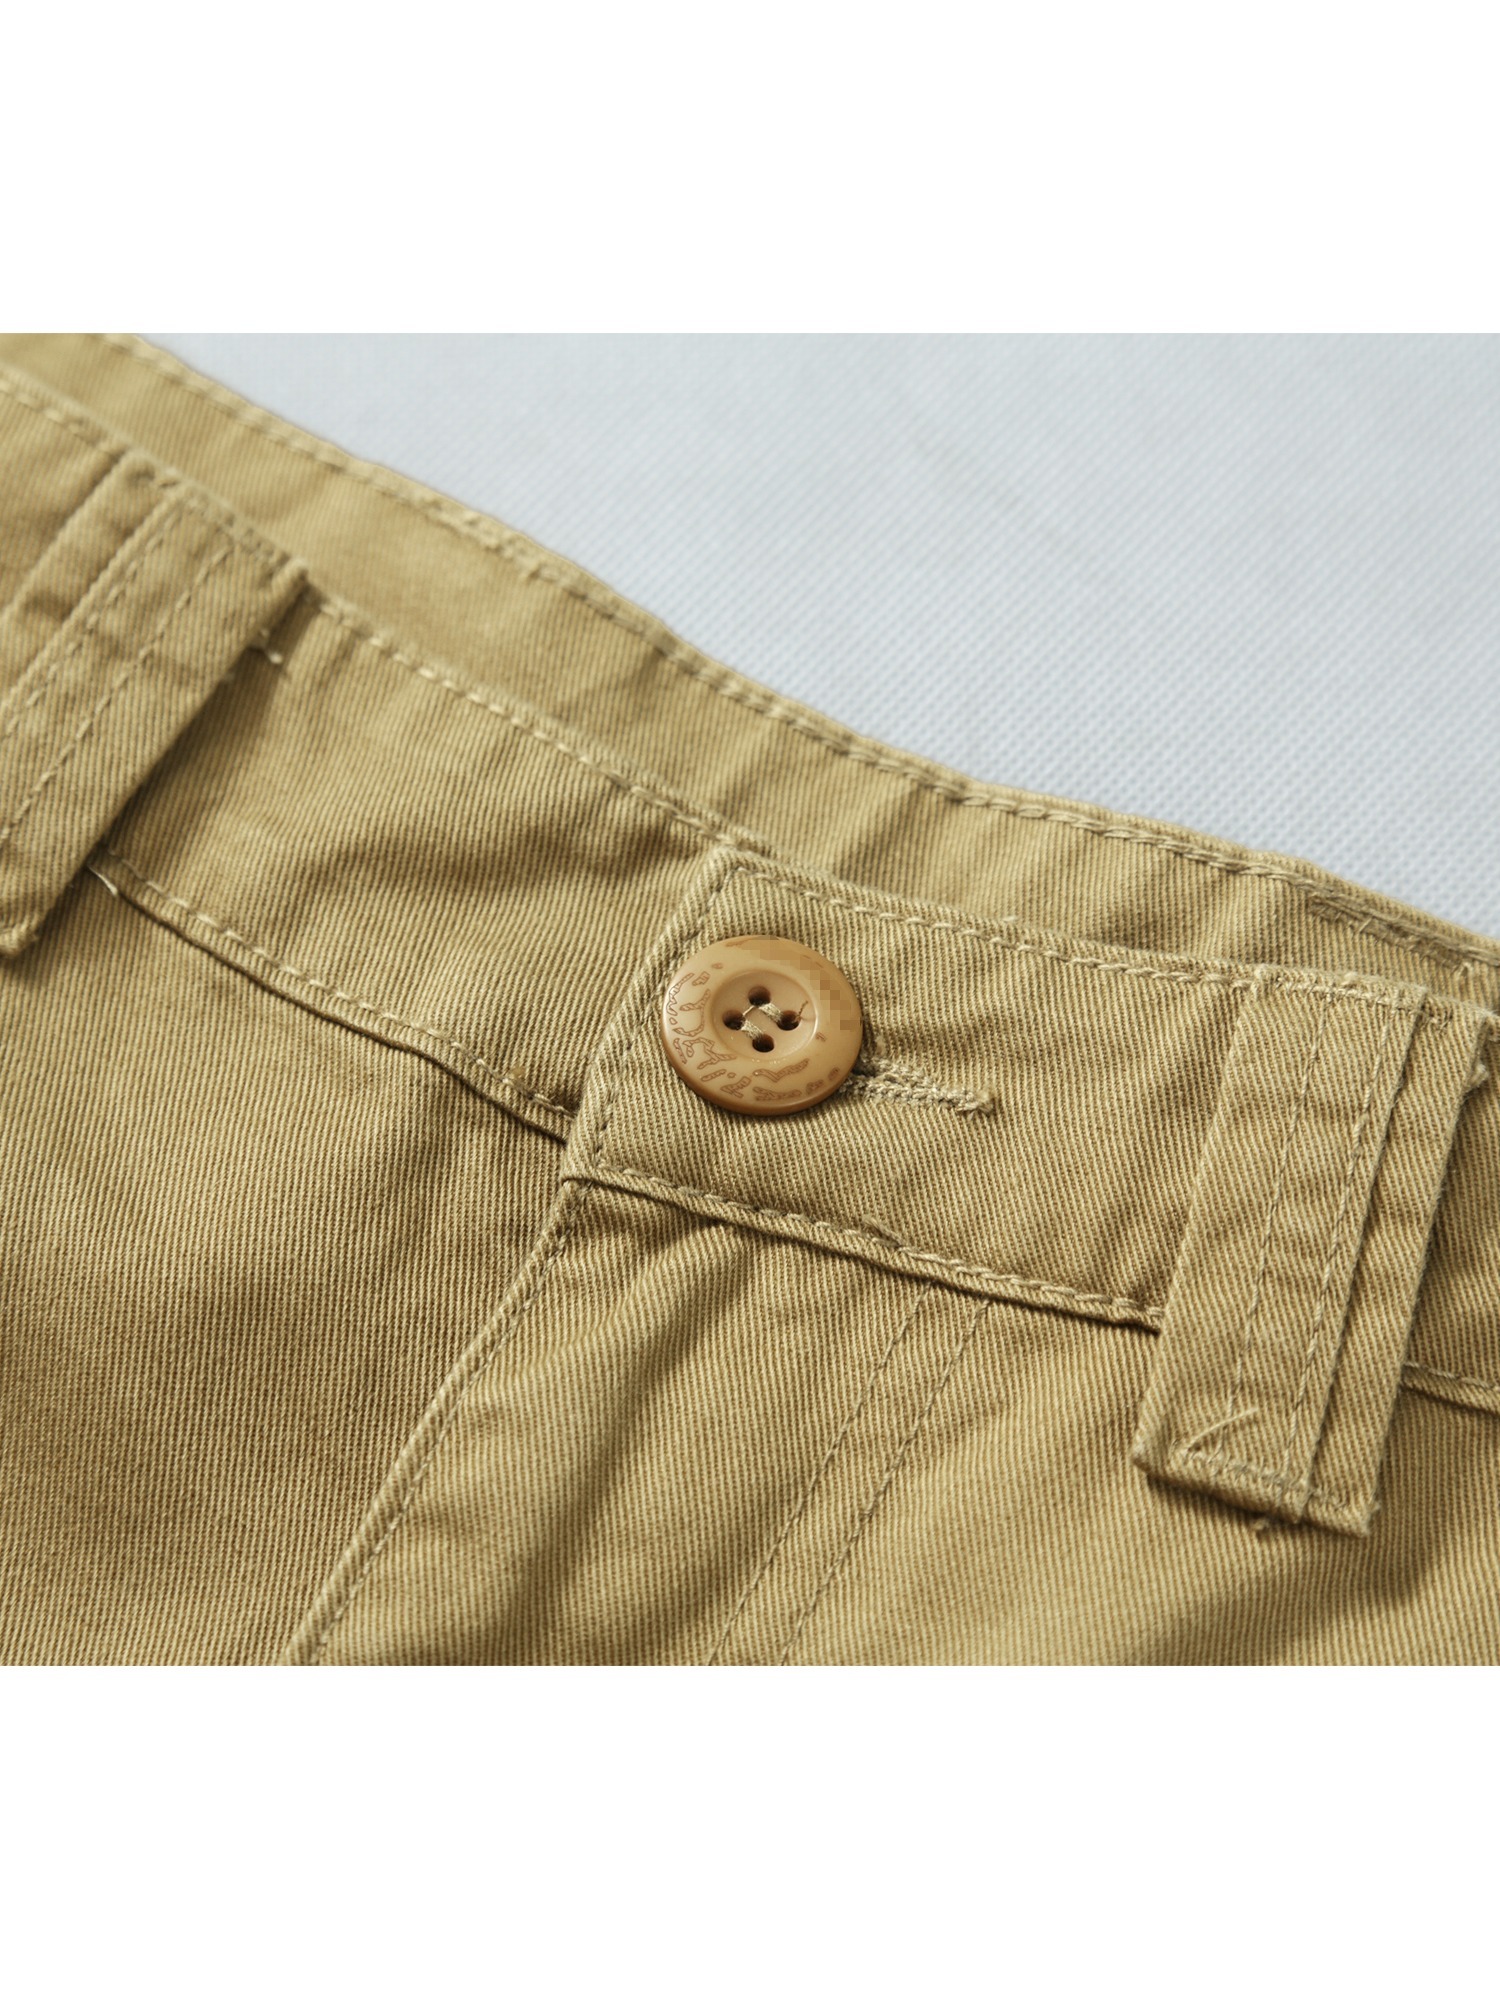 Men's Camouflage Cargo Pants - Rocky SilentHunter HW00270